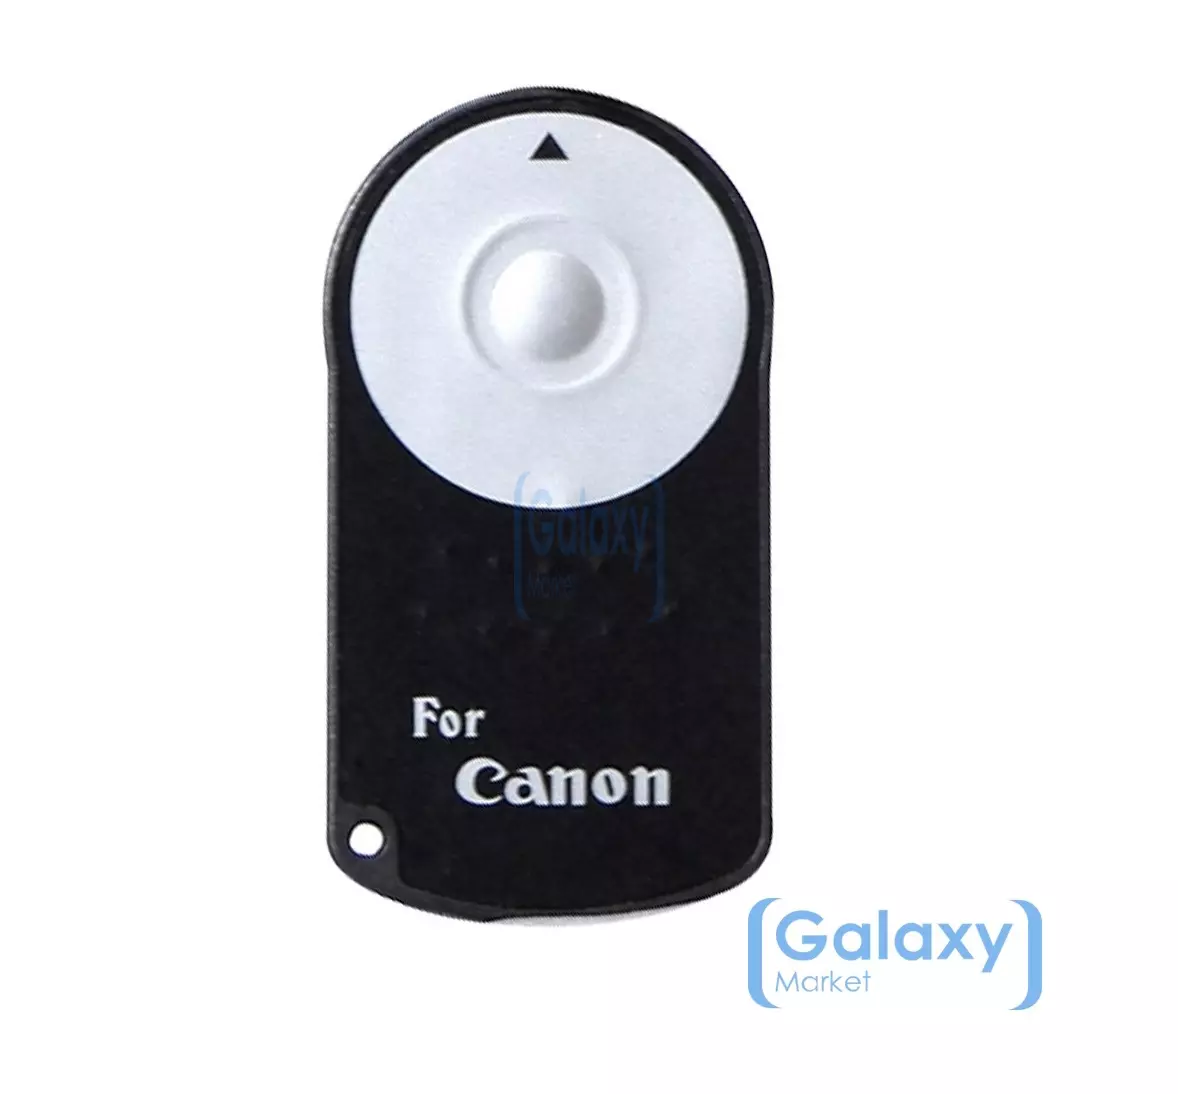 Bluetooth кнопка для селфи Anomaly for Canon Black (Черный)